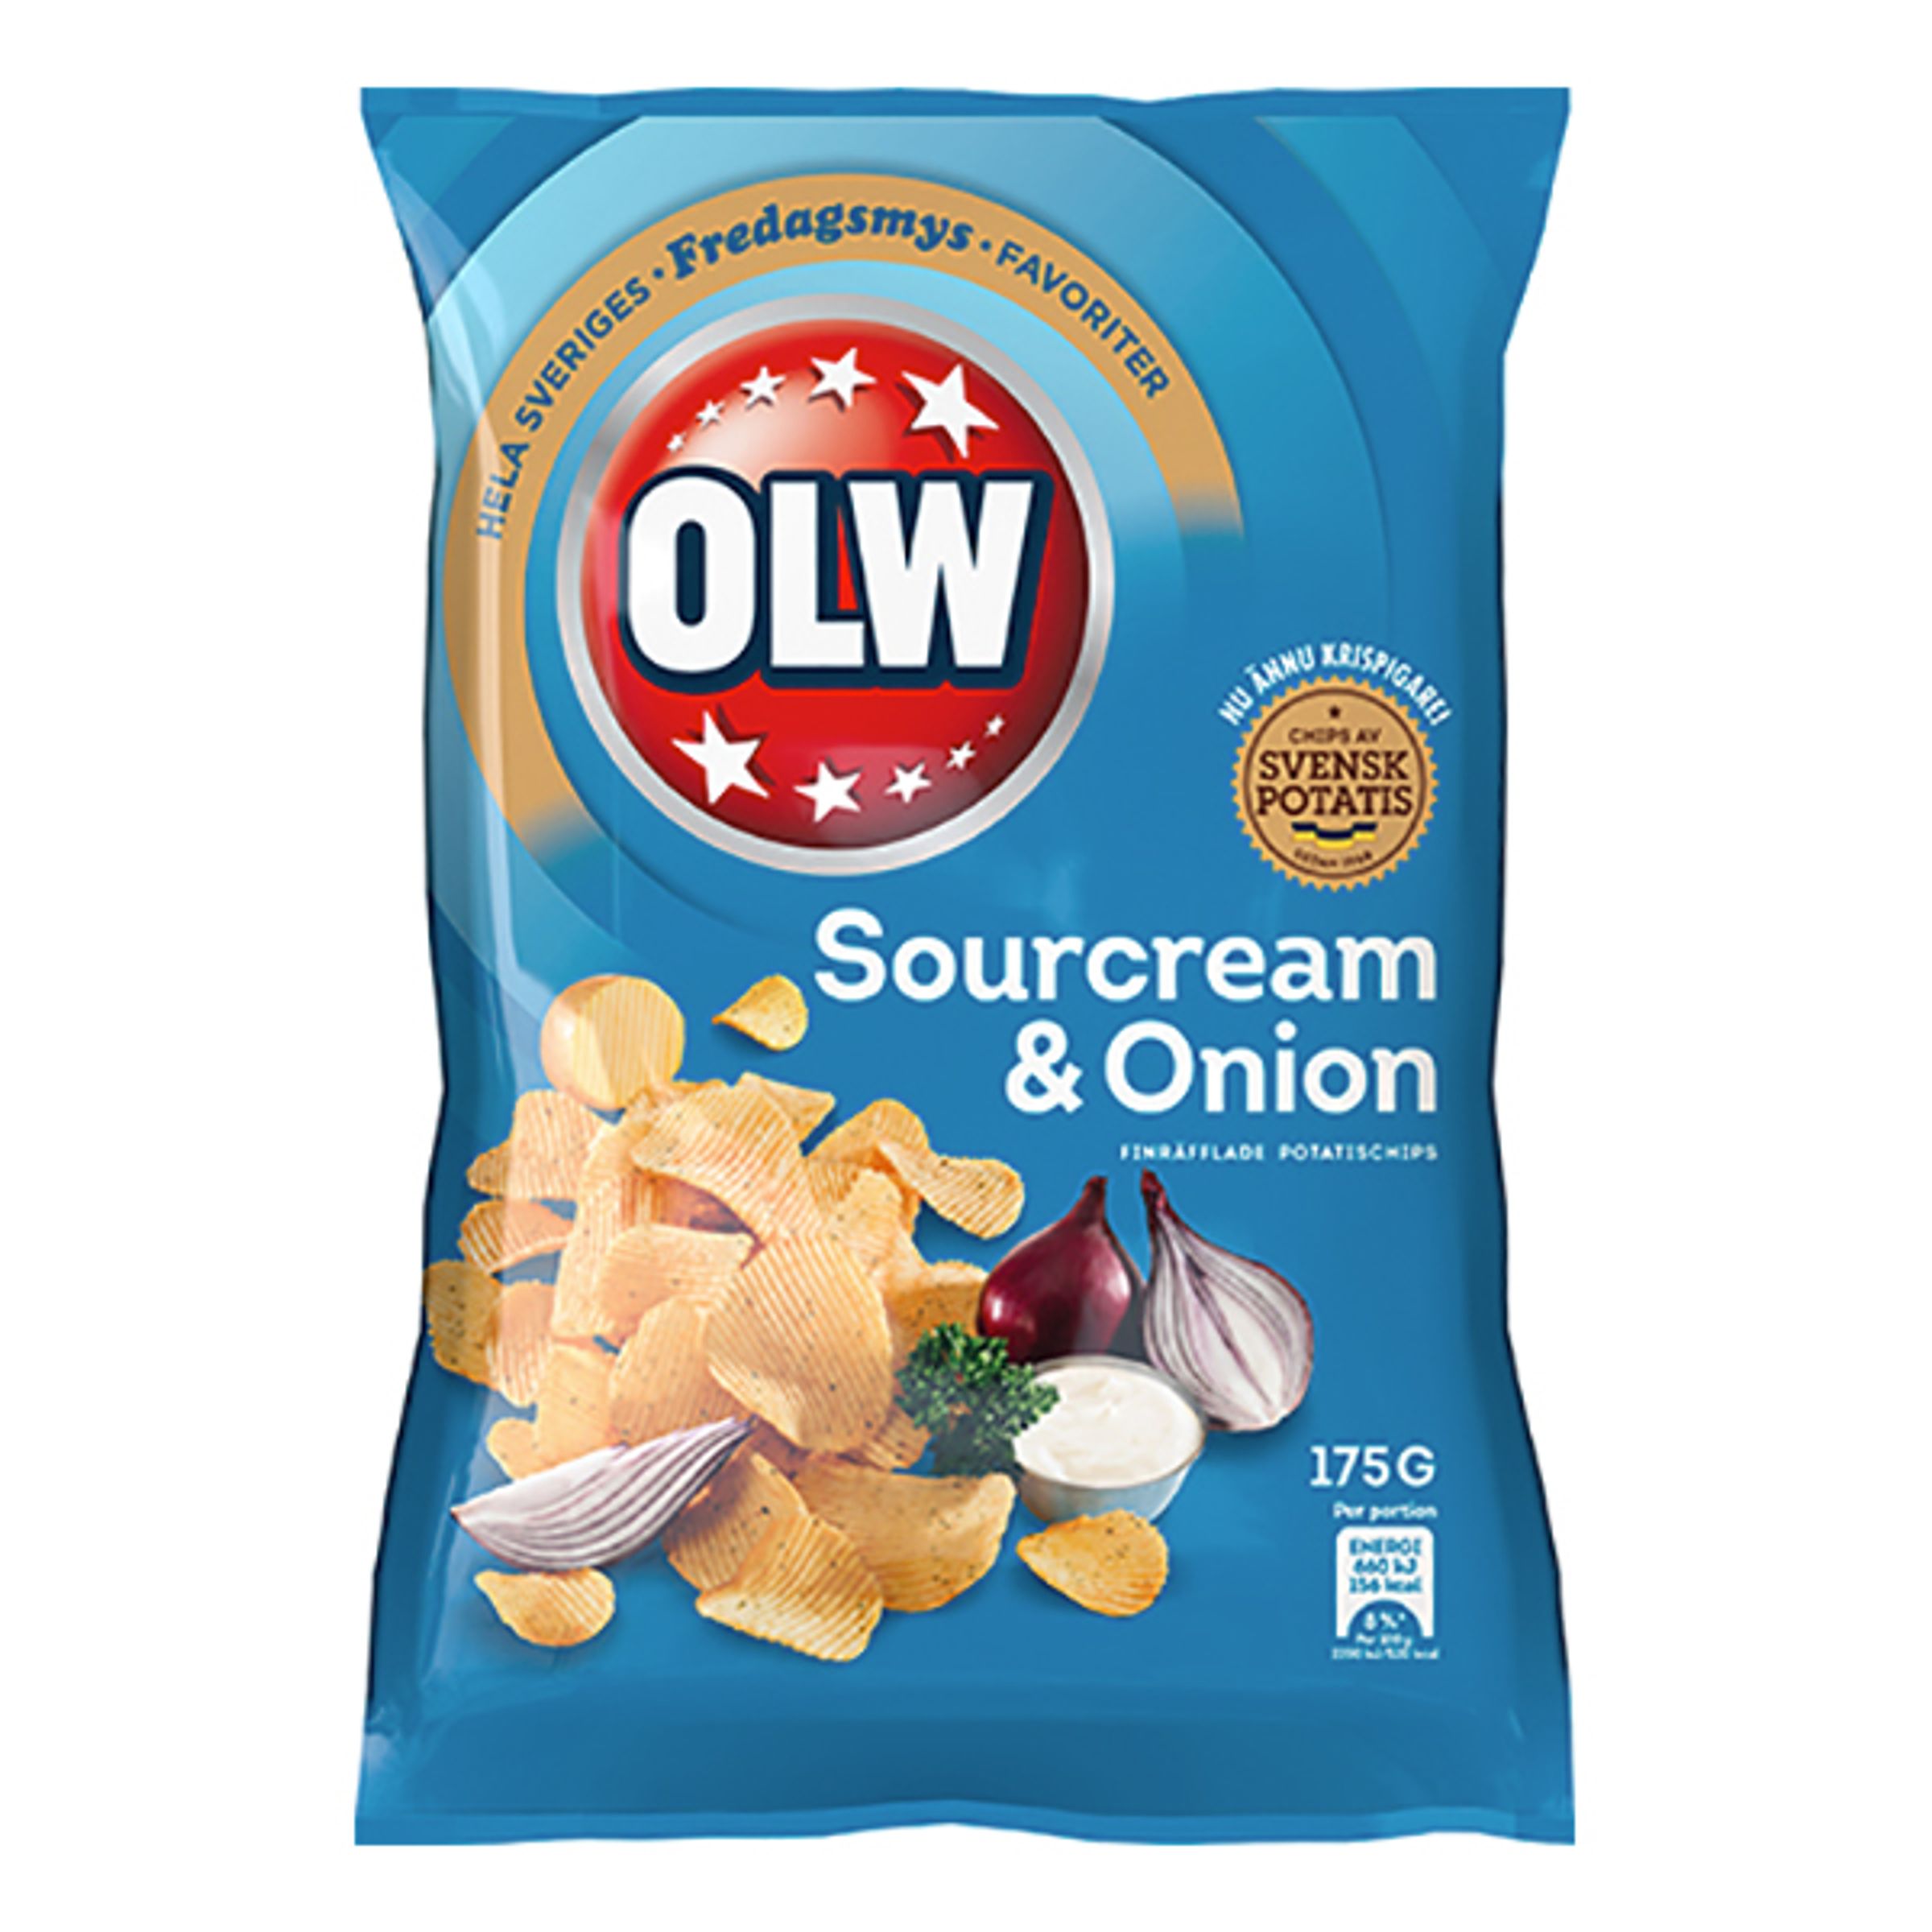 OLW Sourcream & Onion Chips